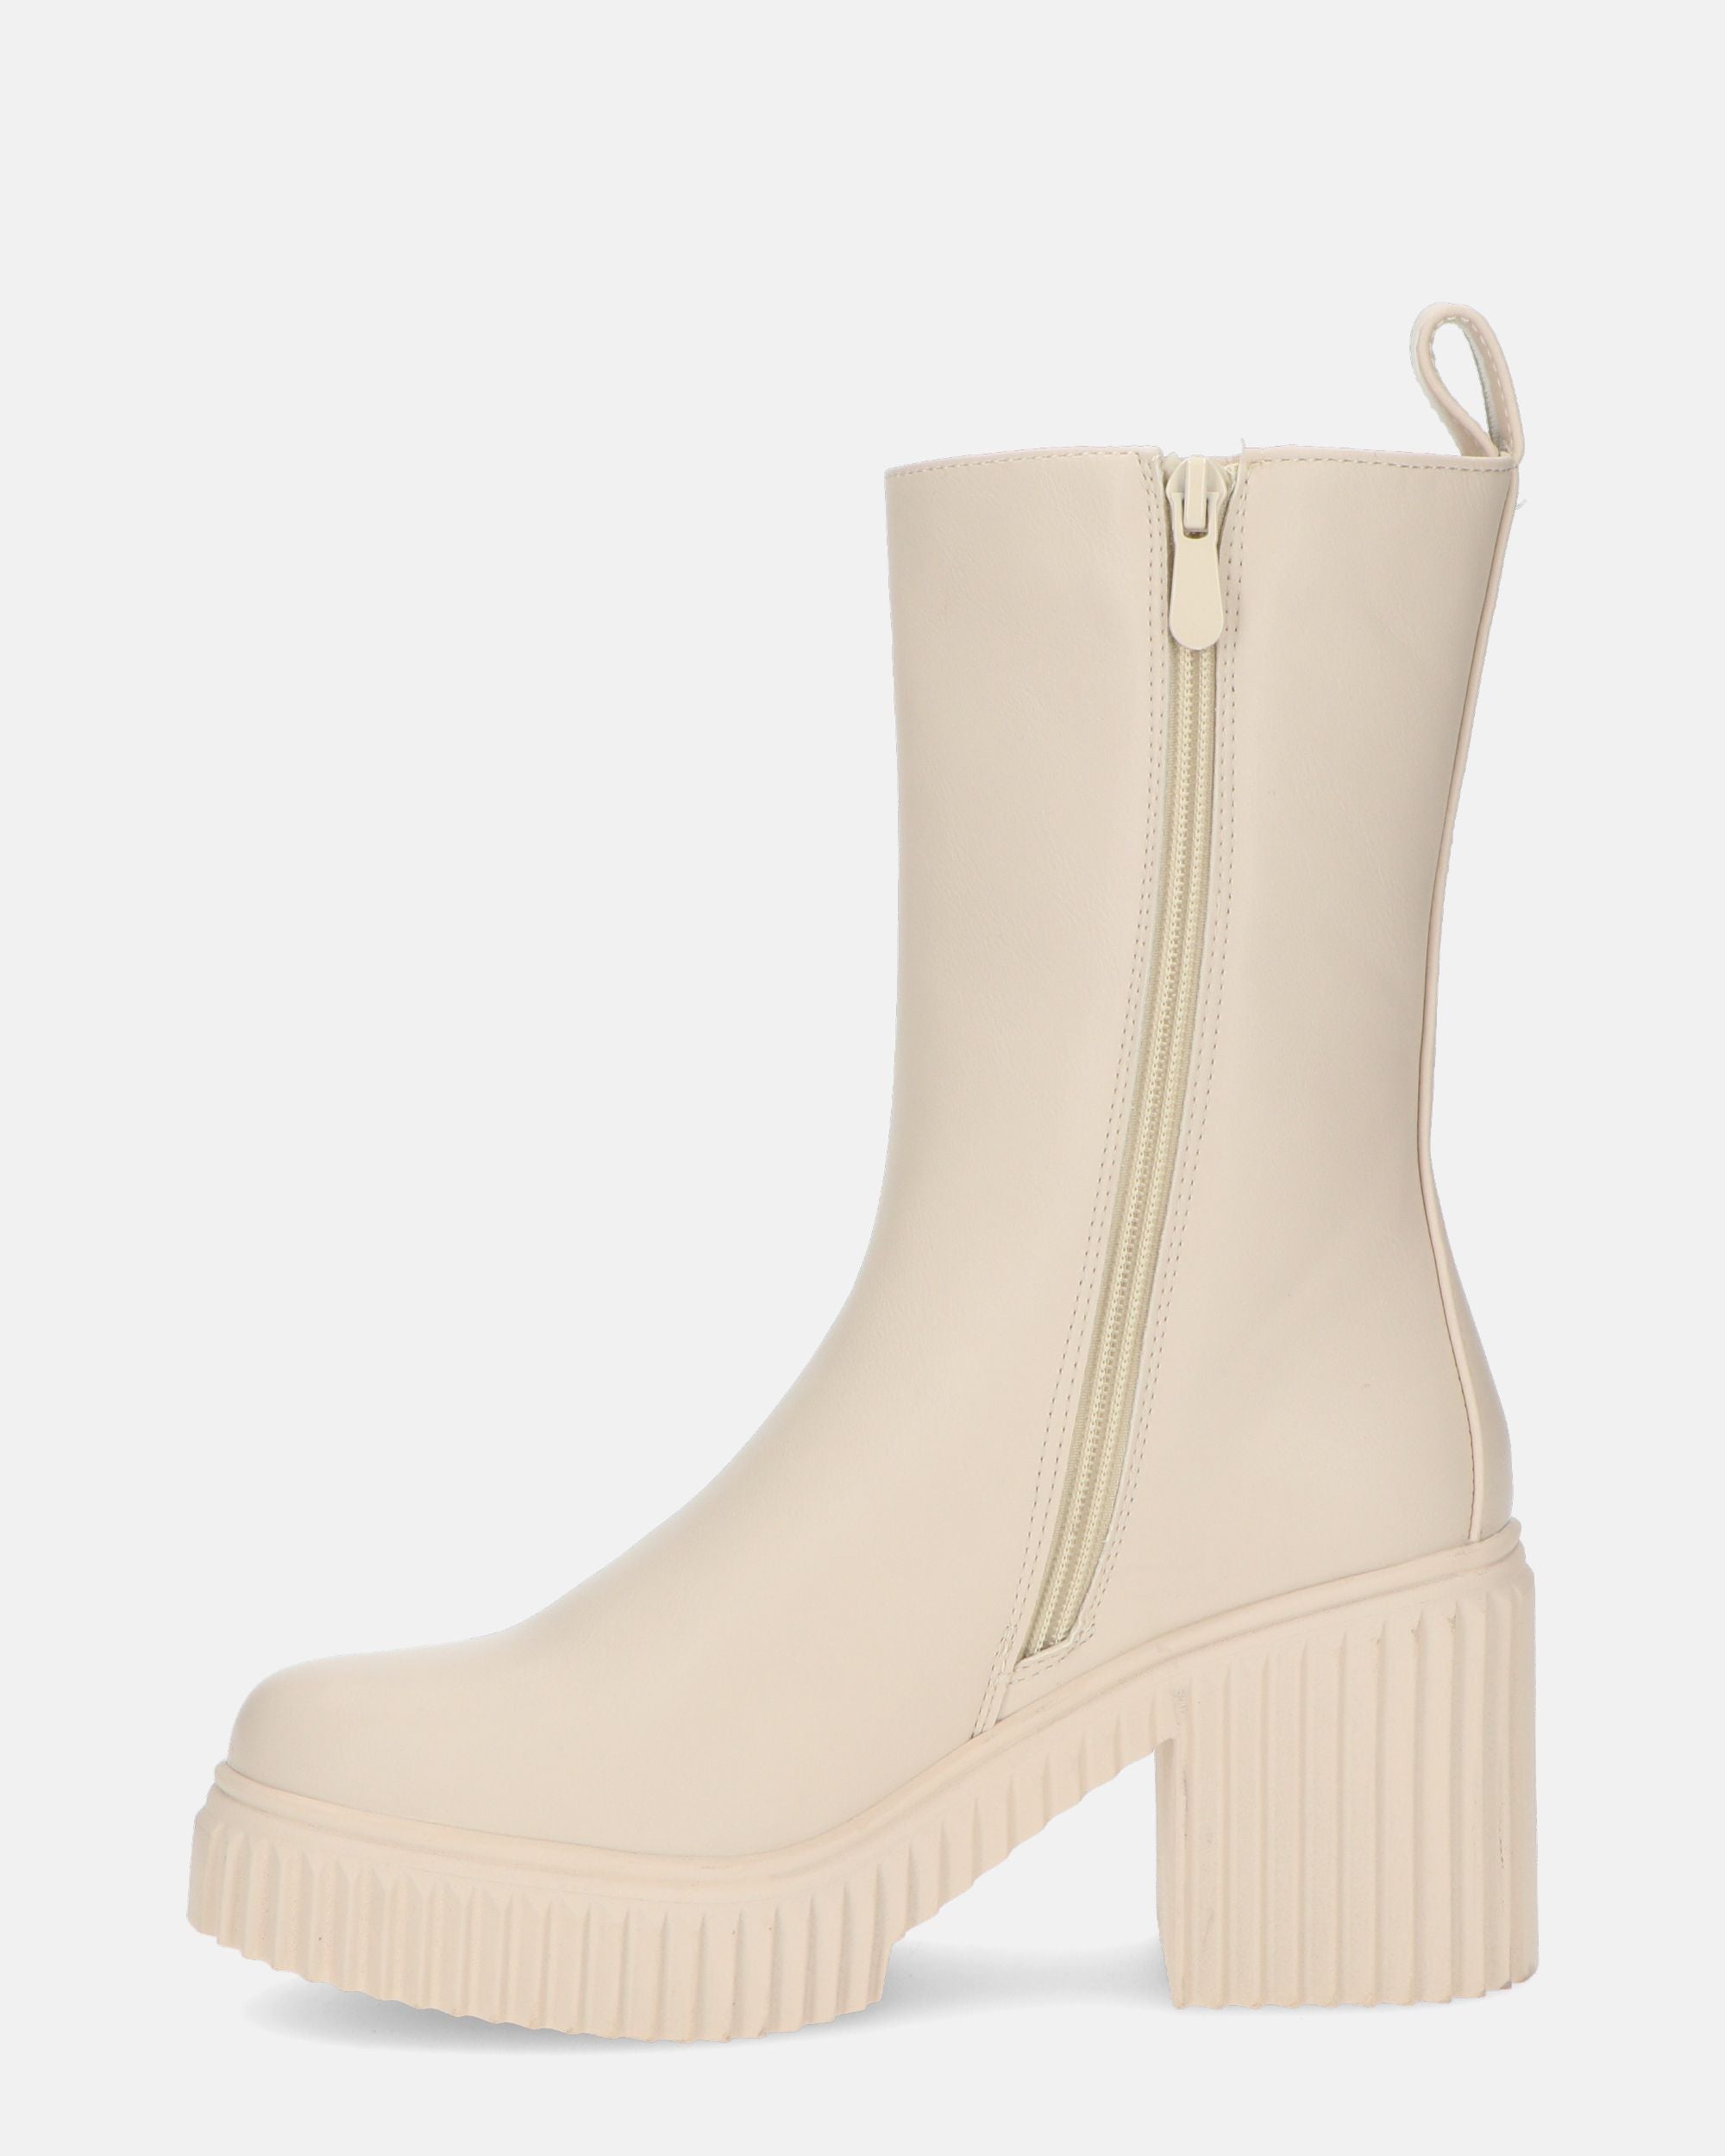 CORALINE - beige PU heel ankle boots with side zip